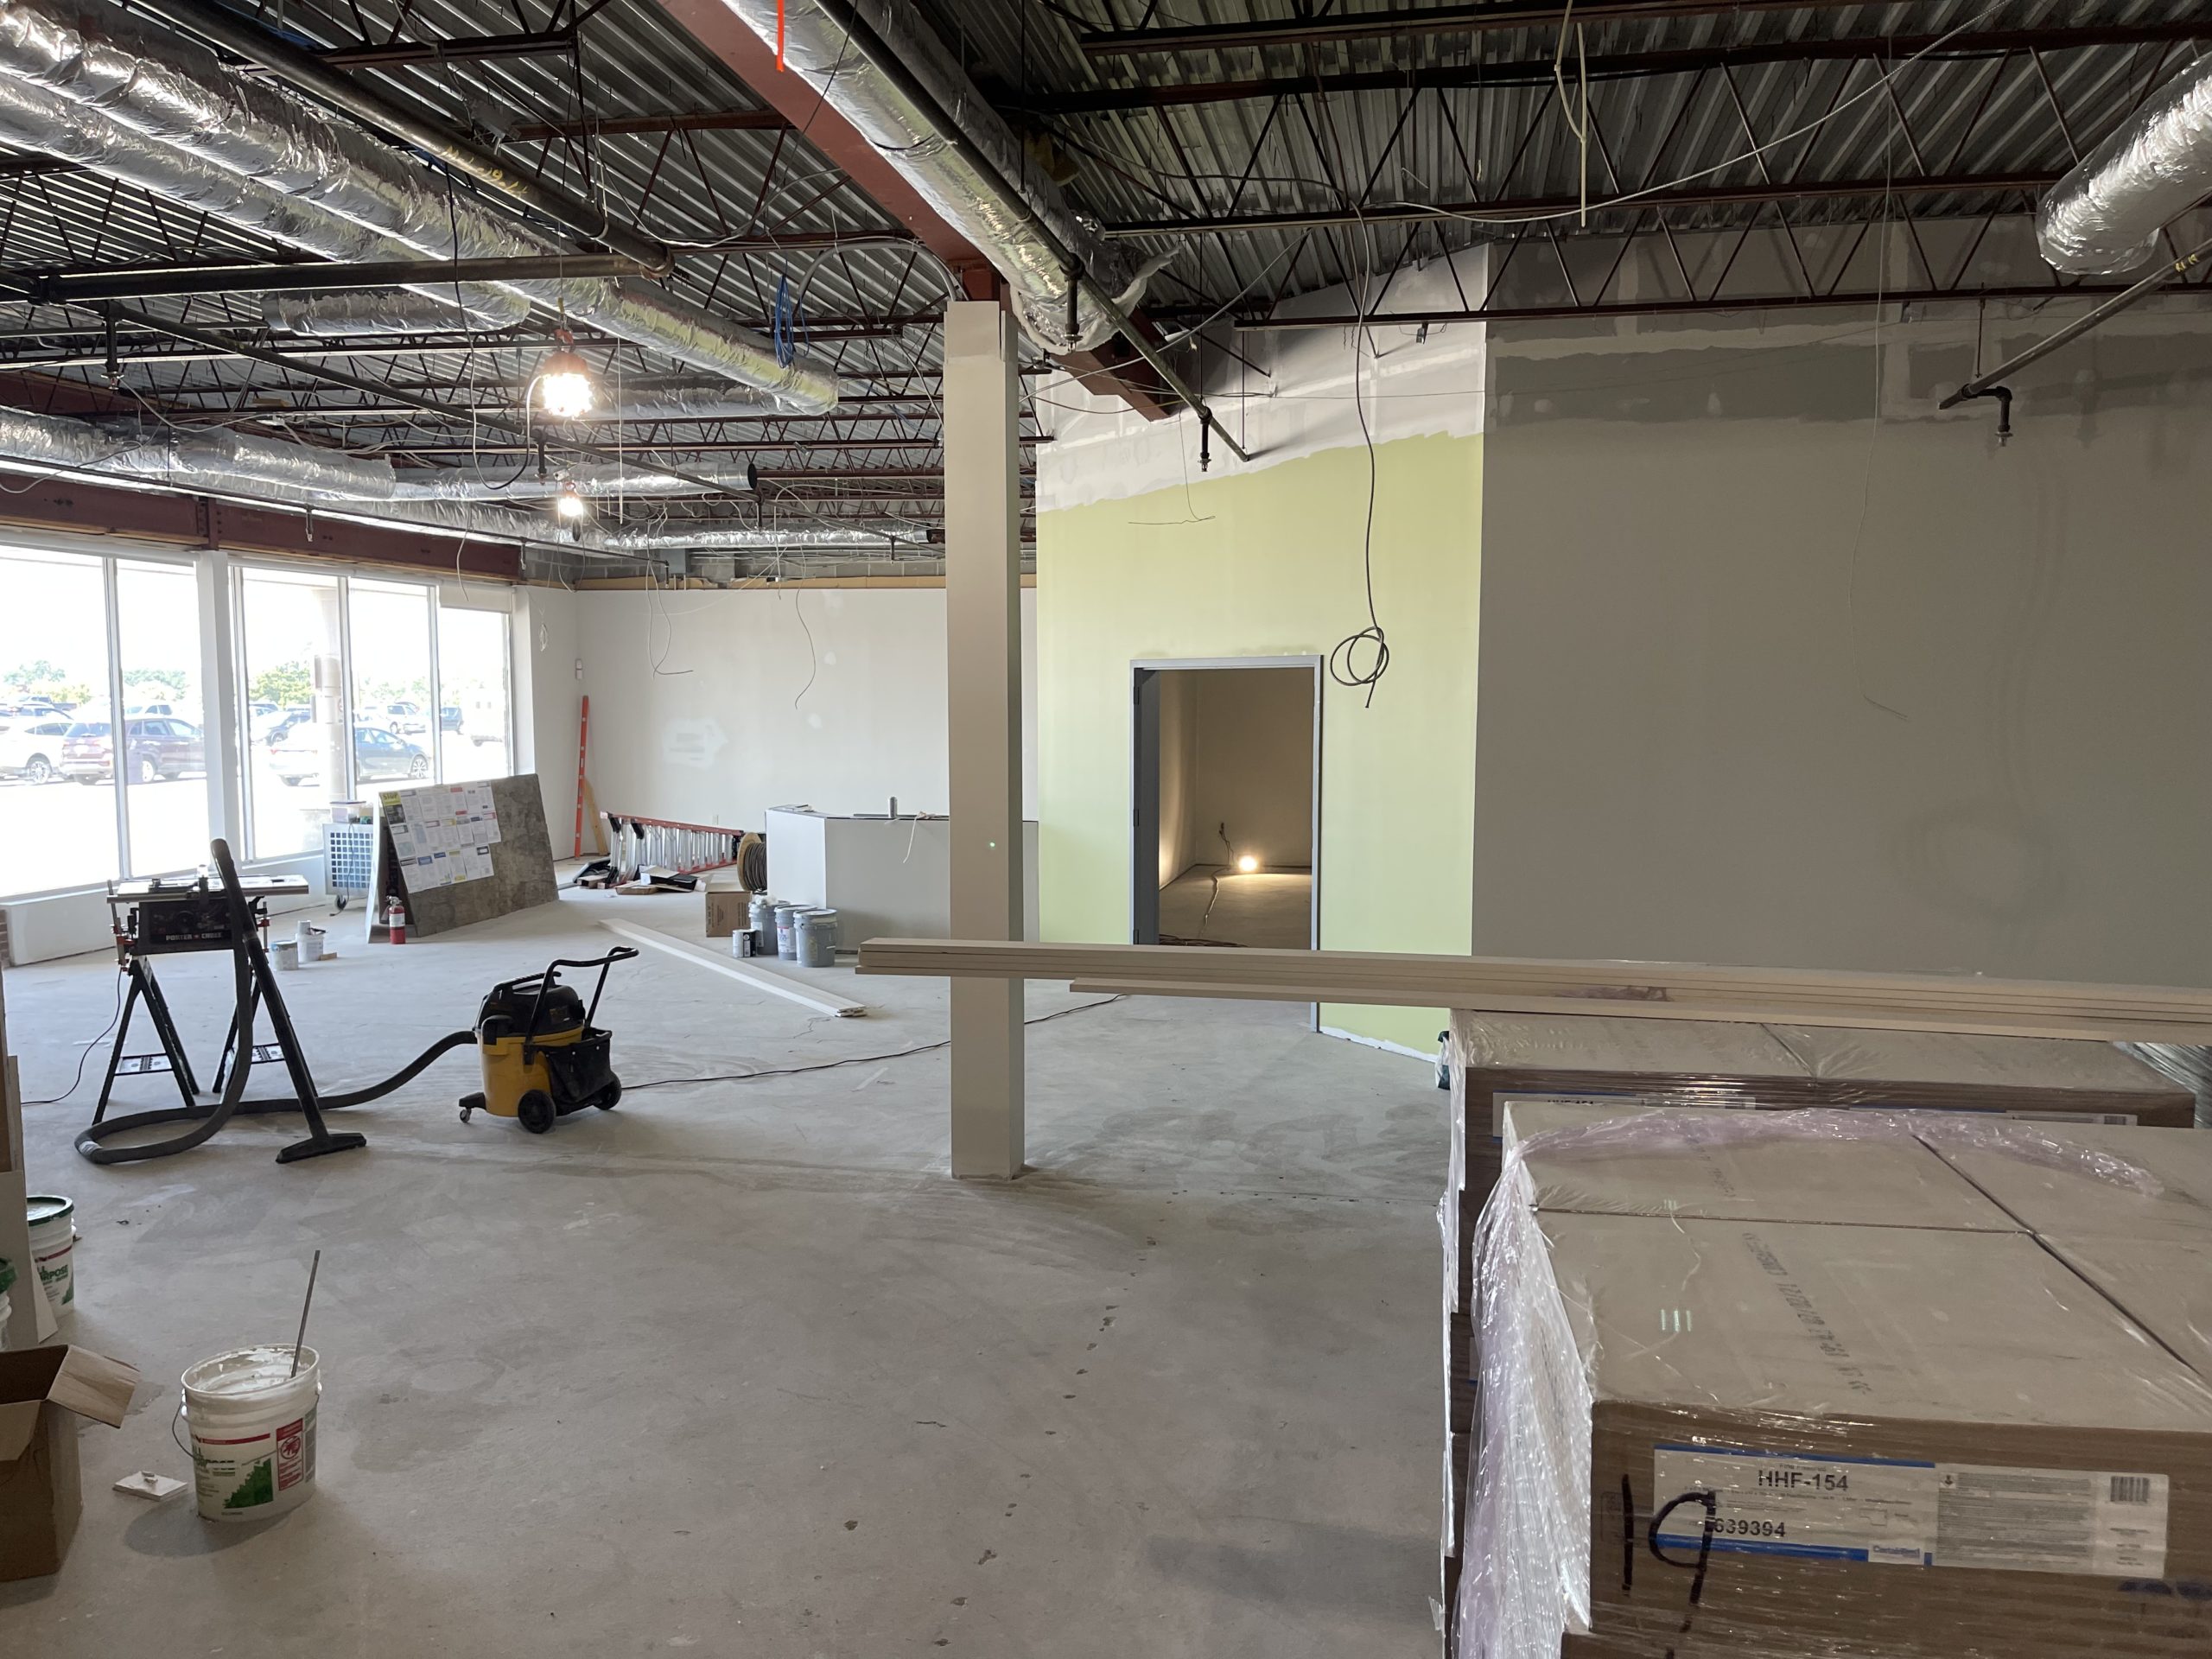 Durgin Center Construction update 8-27